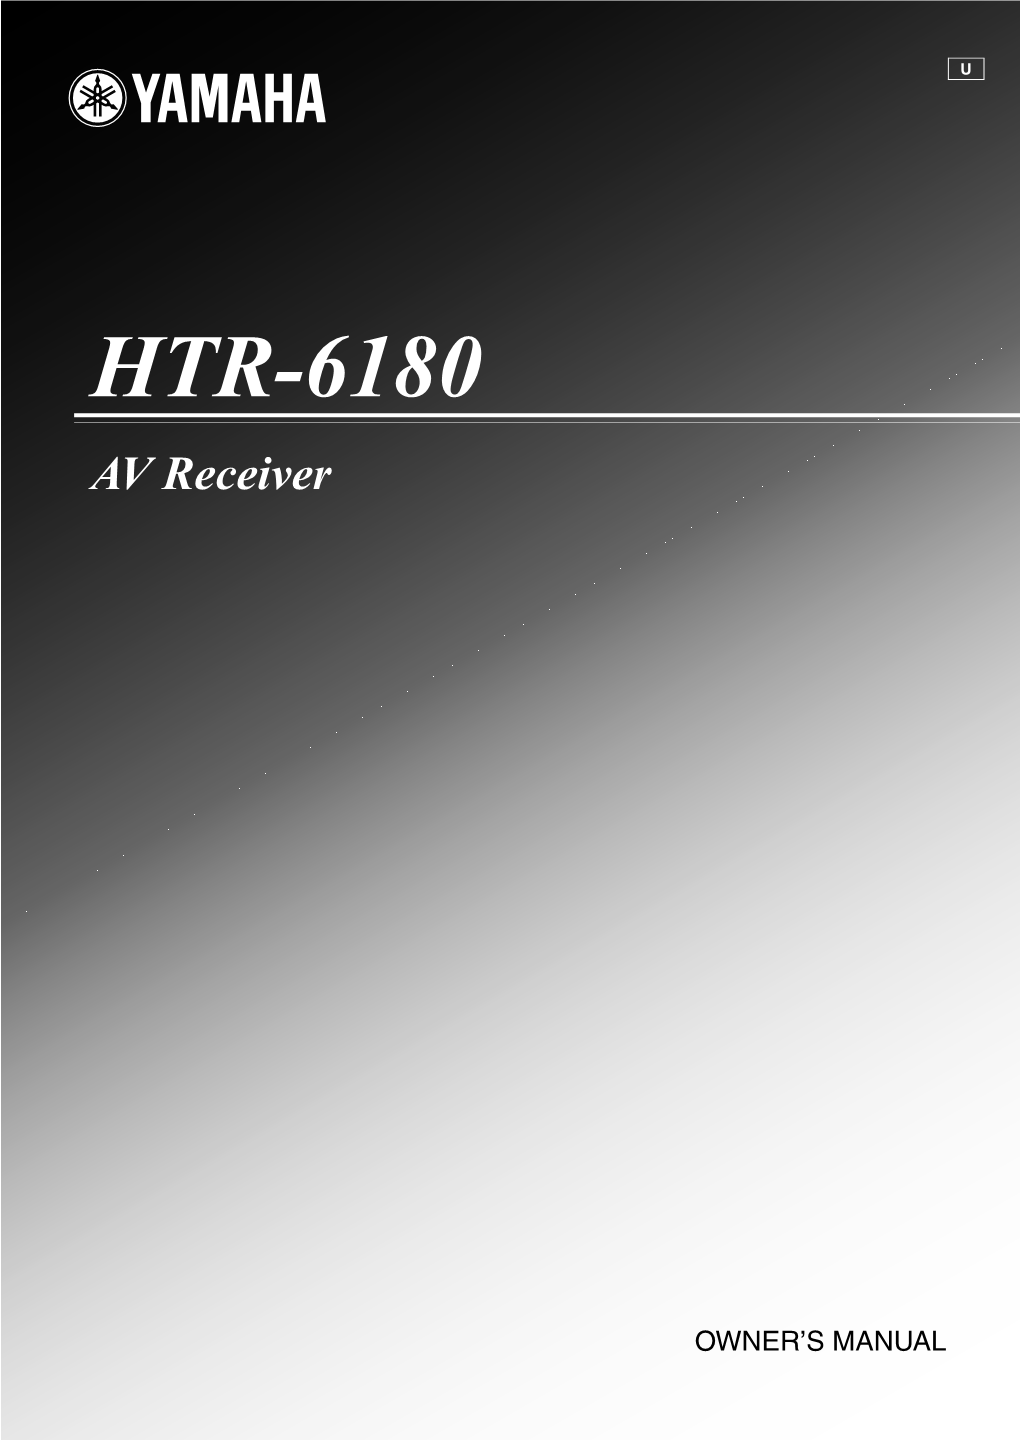 HTR-6180 U-Cv.Fm Page 1 Monday, December 10, 2007 1:32 PM